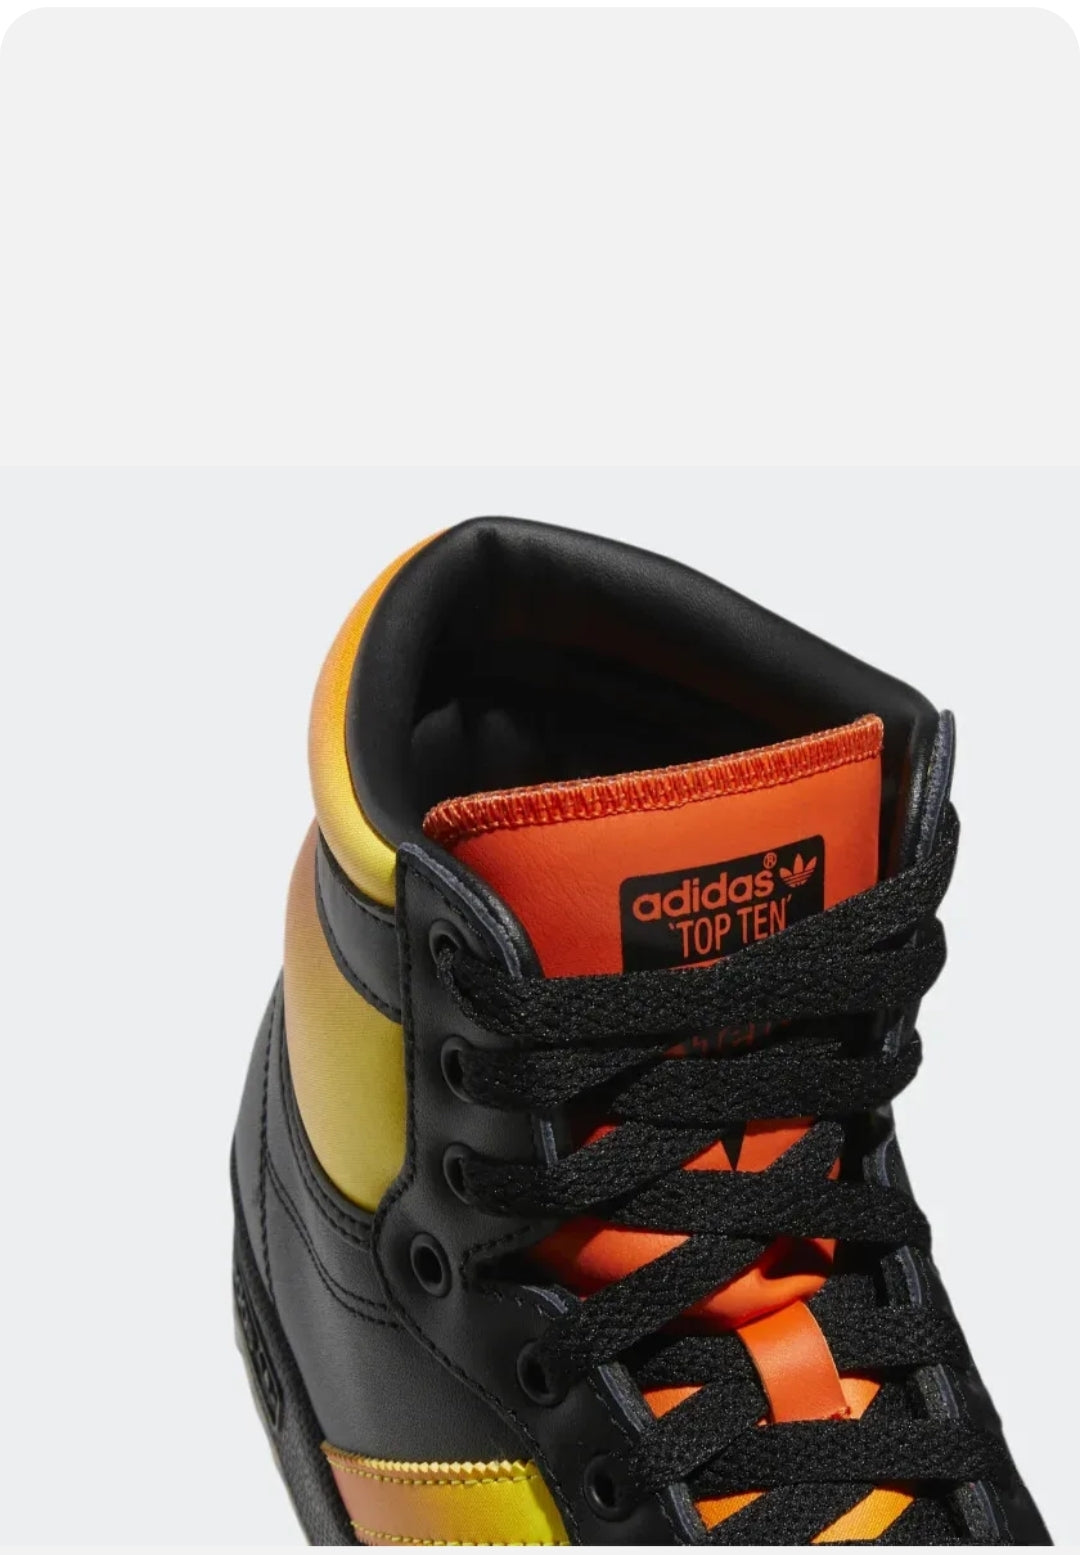 Adidas Top Ten Hi Black Yellow Orange FZ5889